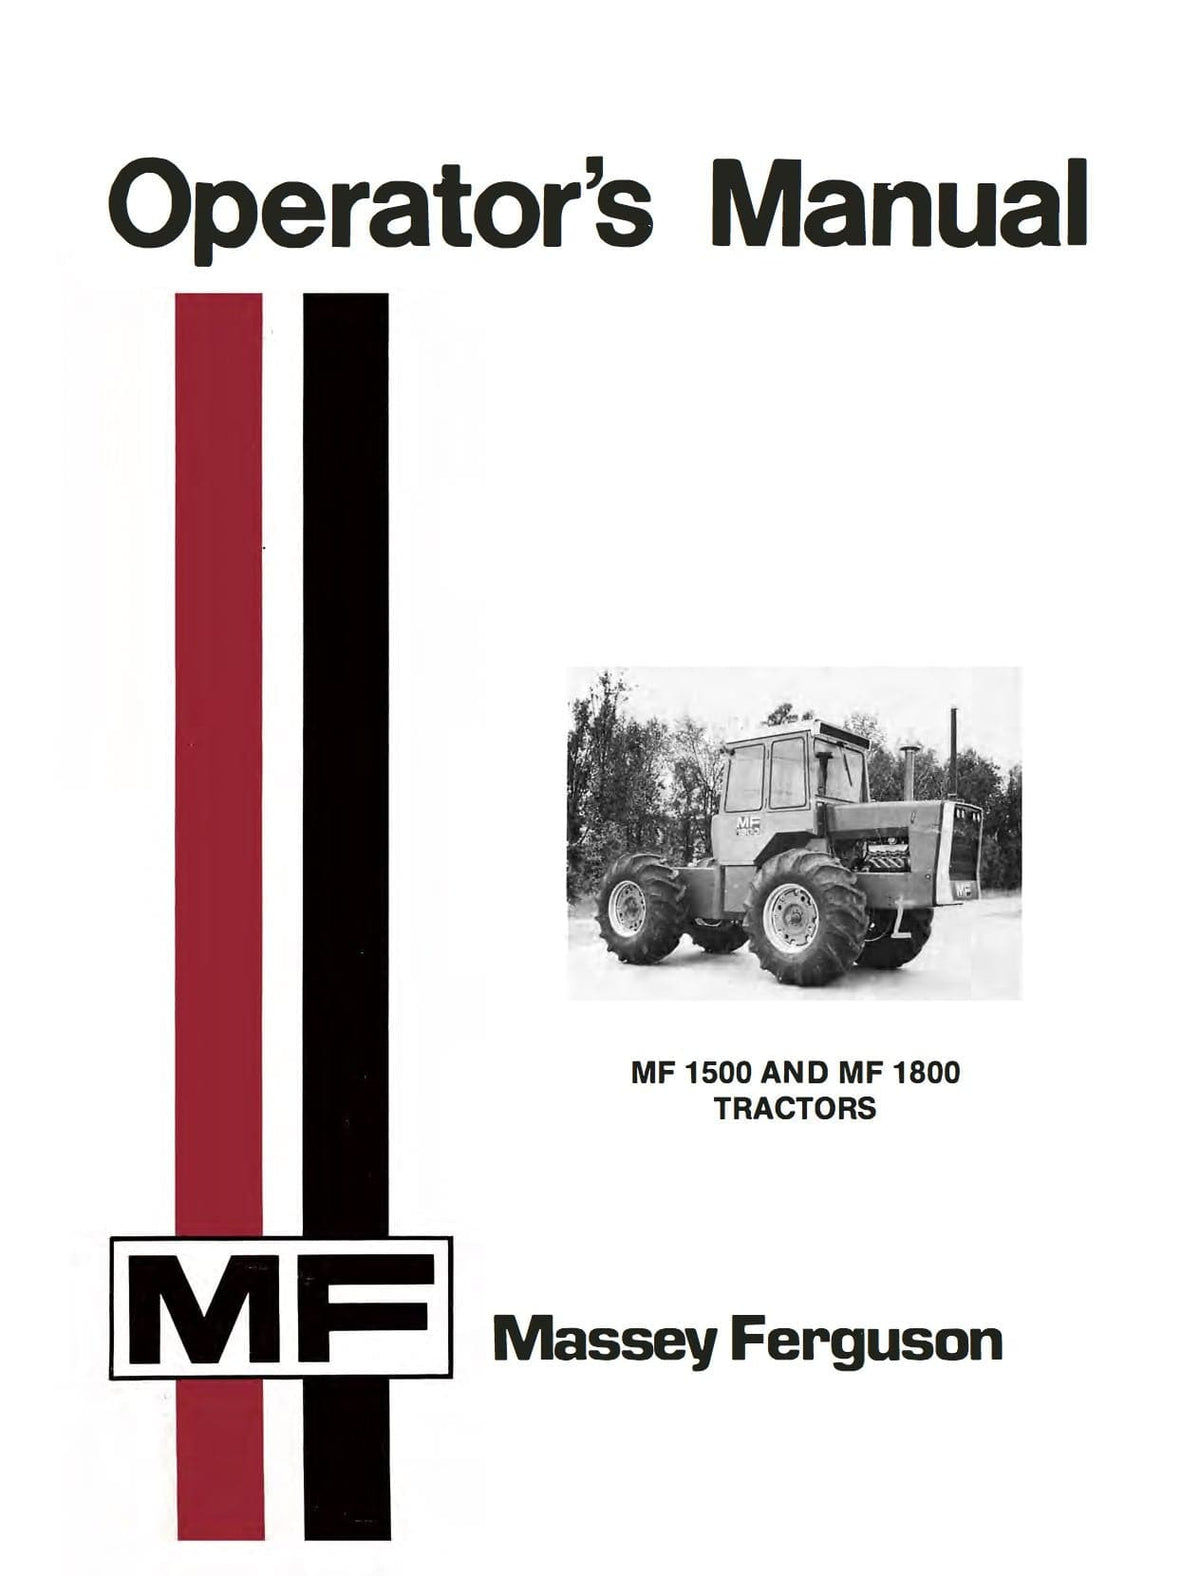 Massey Ferguson MF 1500 and MF 1800 Tractors - Operator's Manual - Ag Manuals - A Provider of Digital Farm Manuals - 1